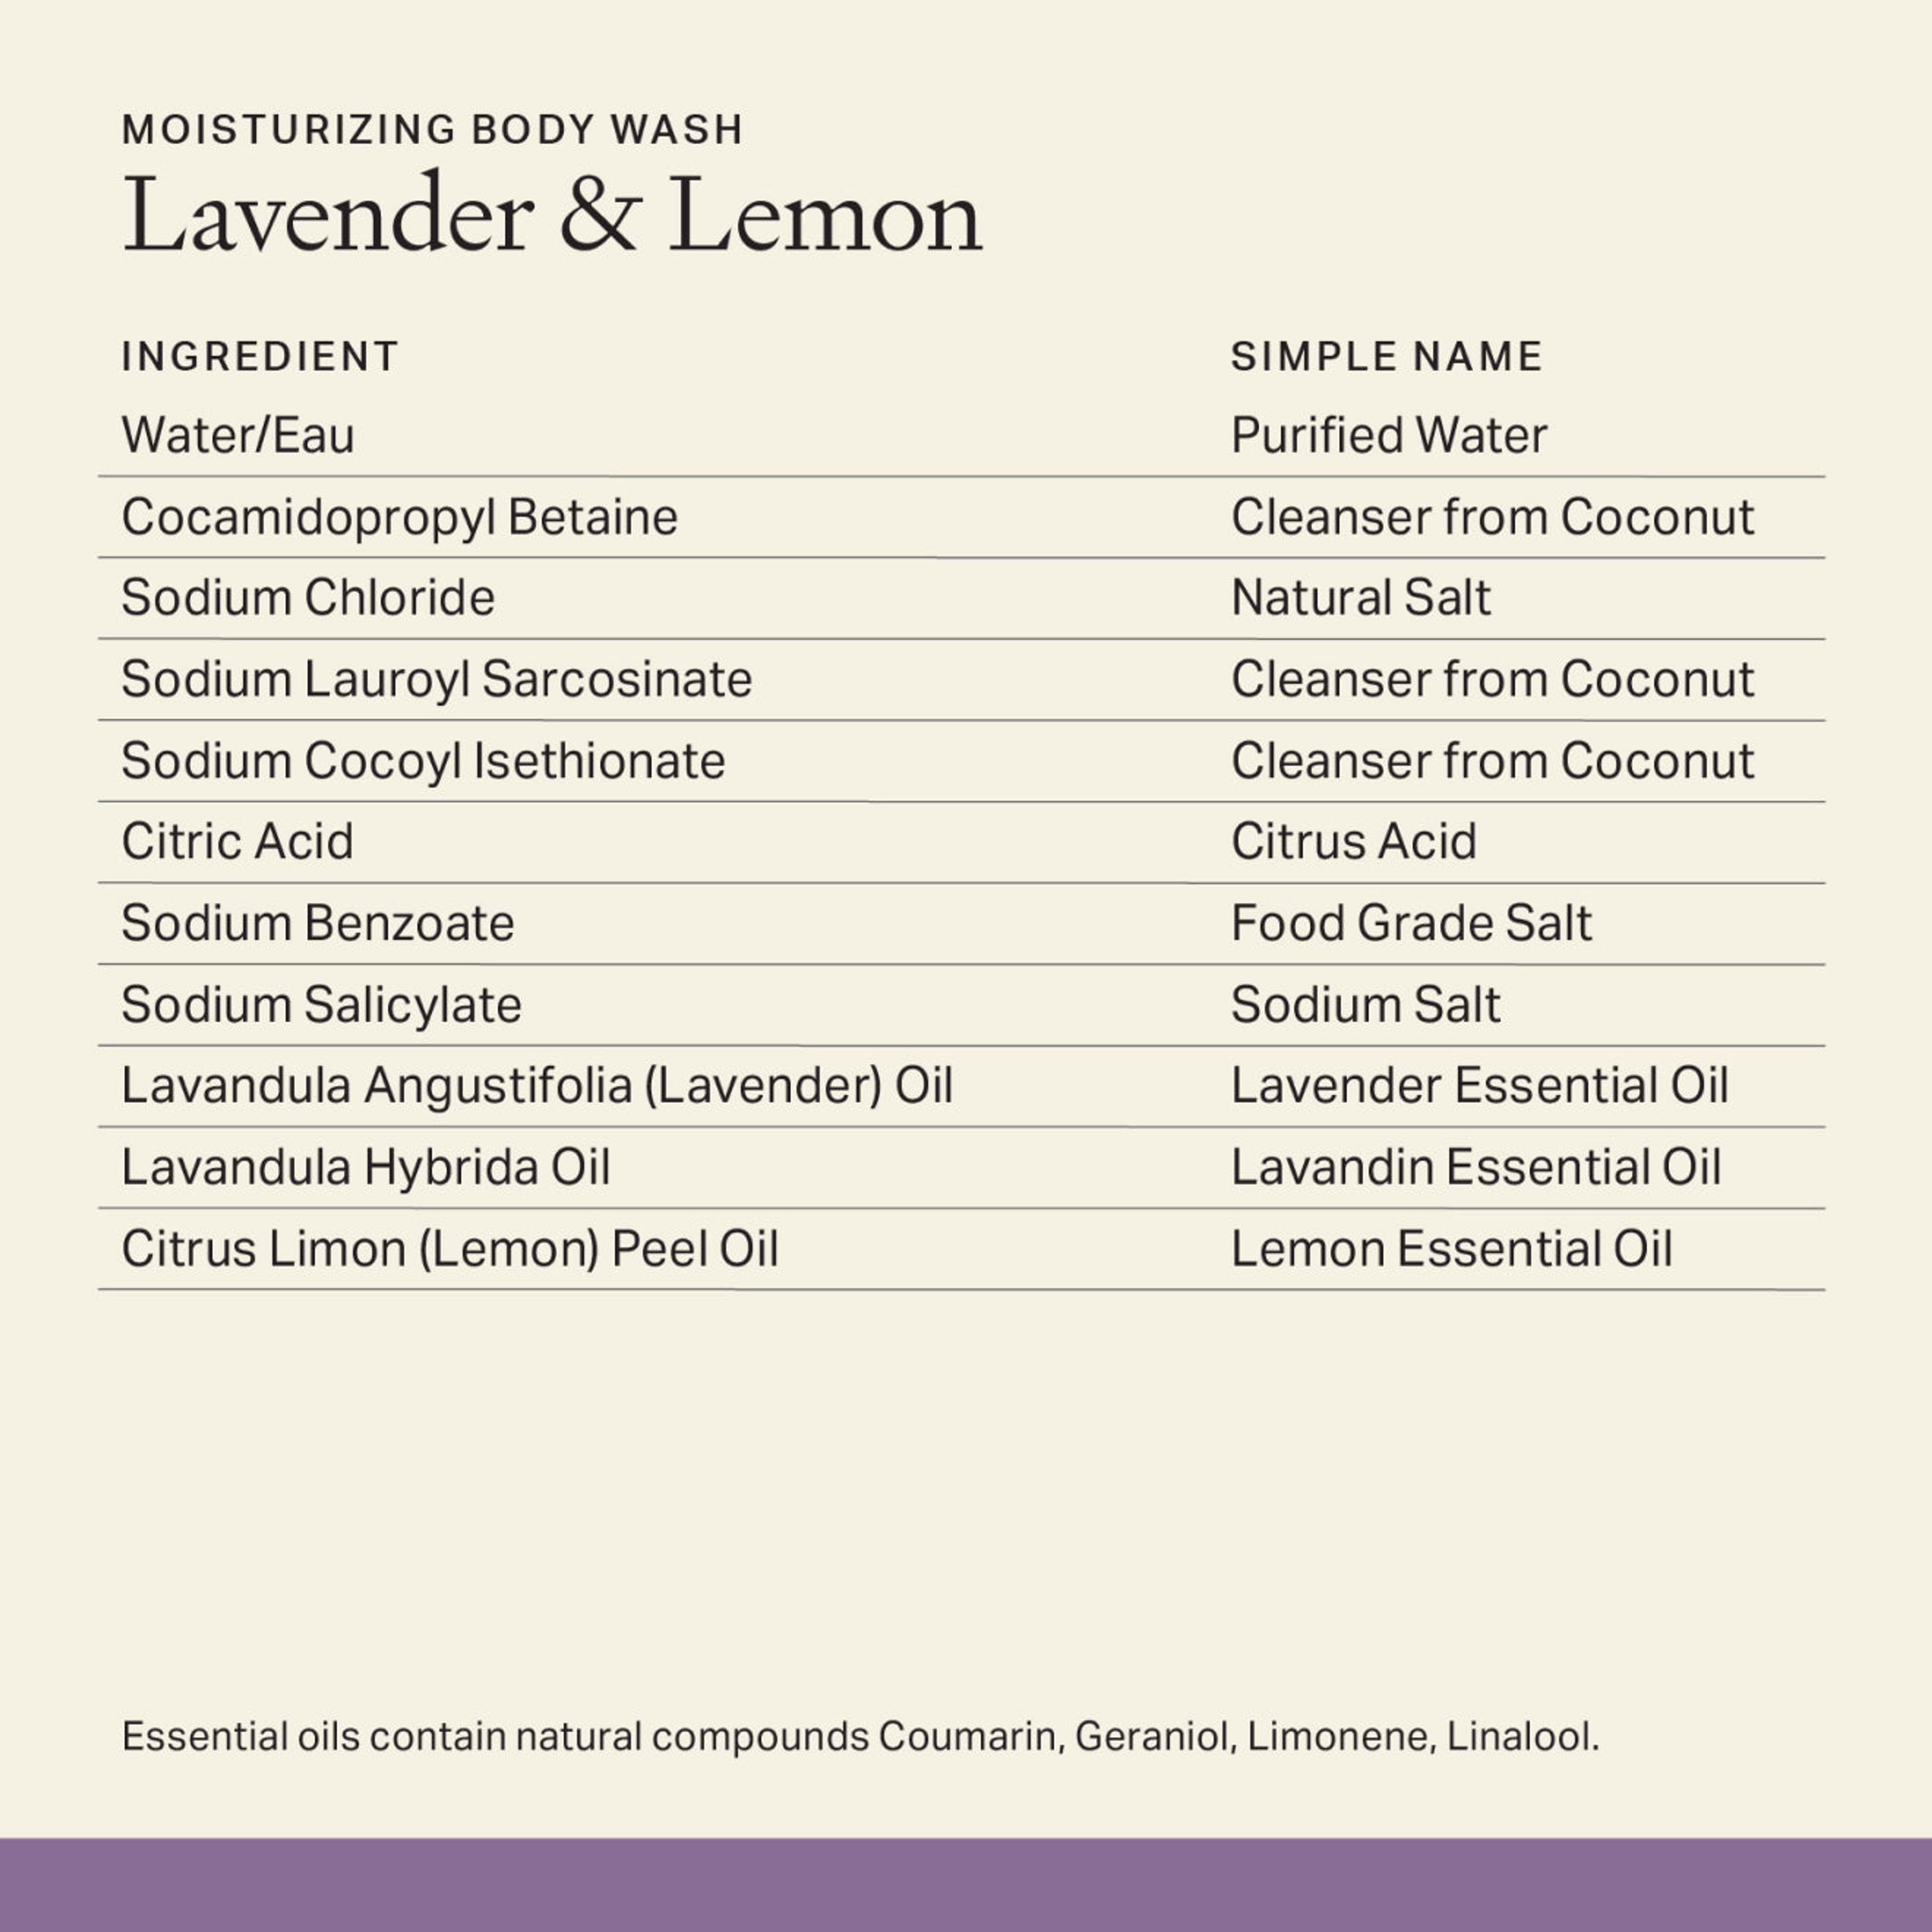 Lavender & Lemon Moisturizing Body Wash